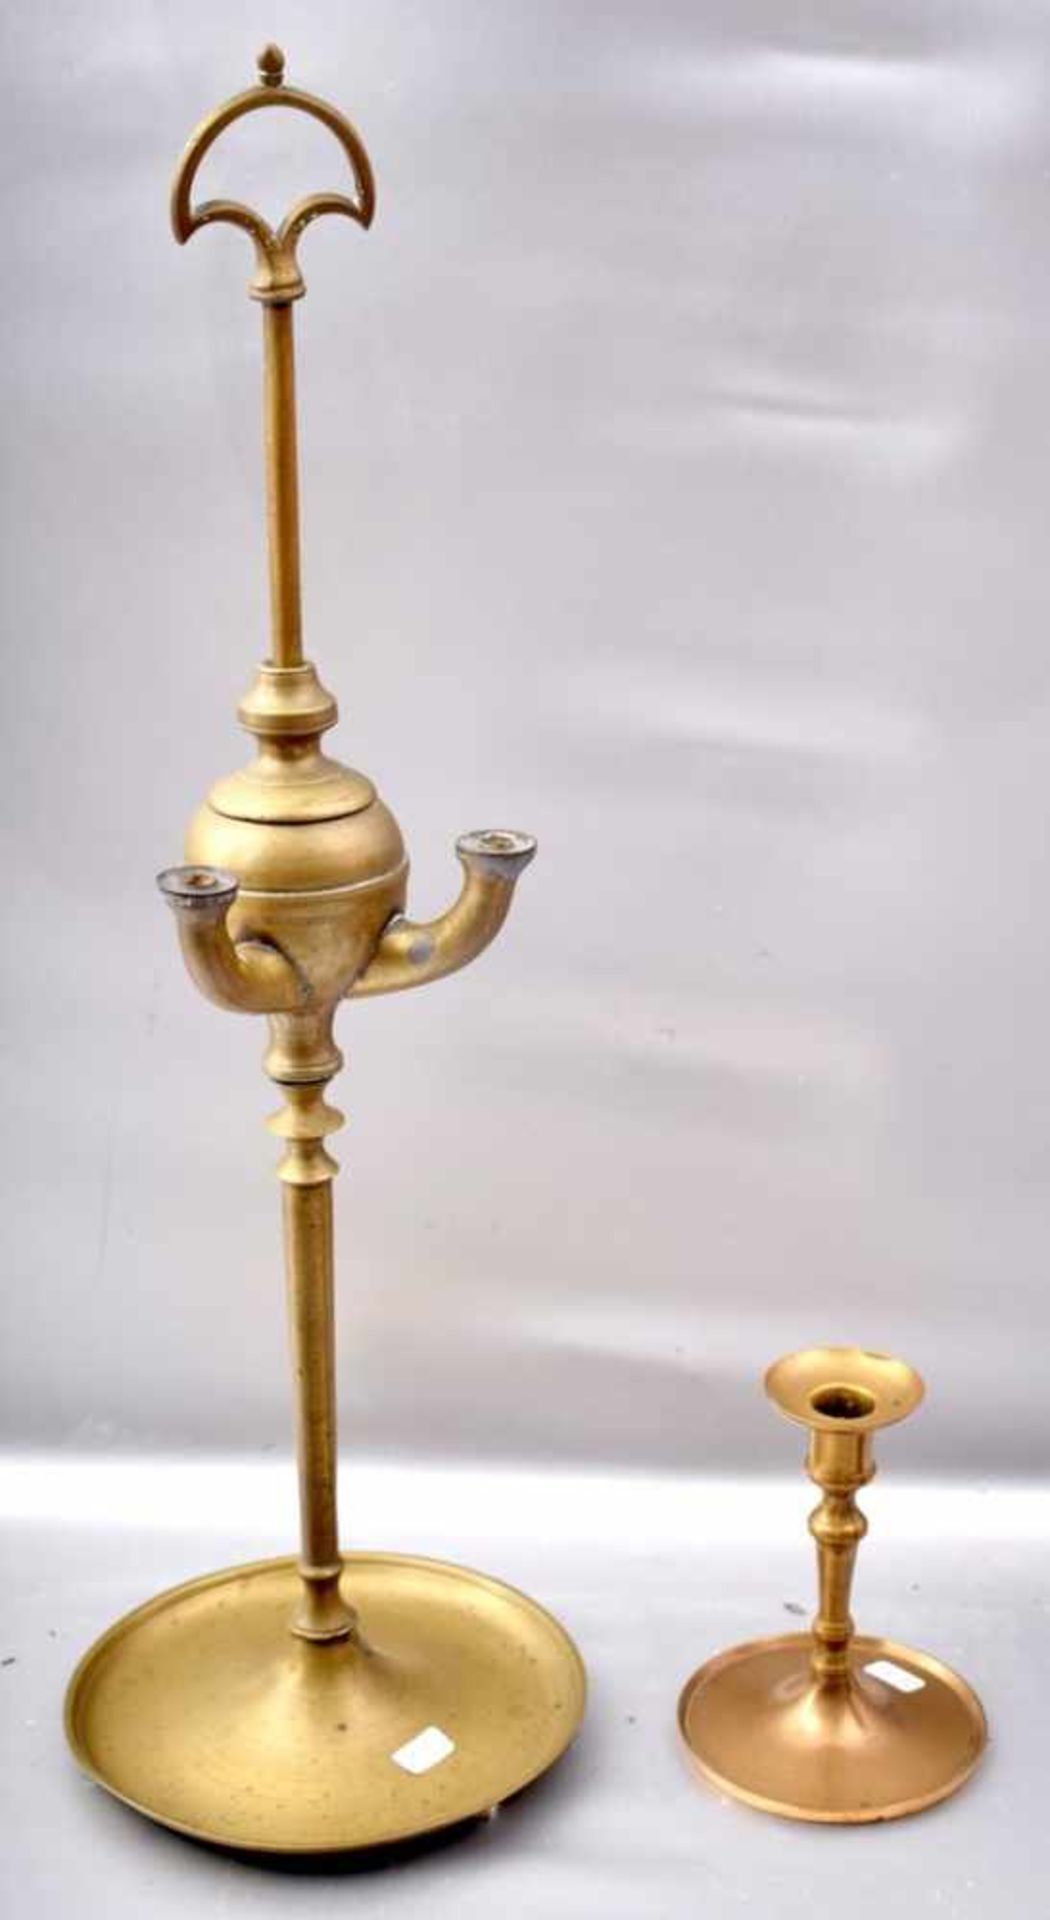 Öllampe und Biedermeier-Kerzenleuchter Messing, H 49 cm bzw. 13 cm, 19. Jh.